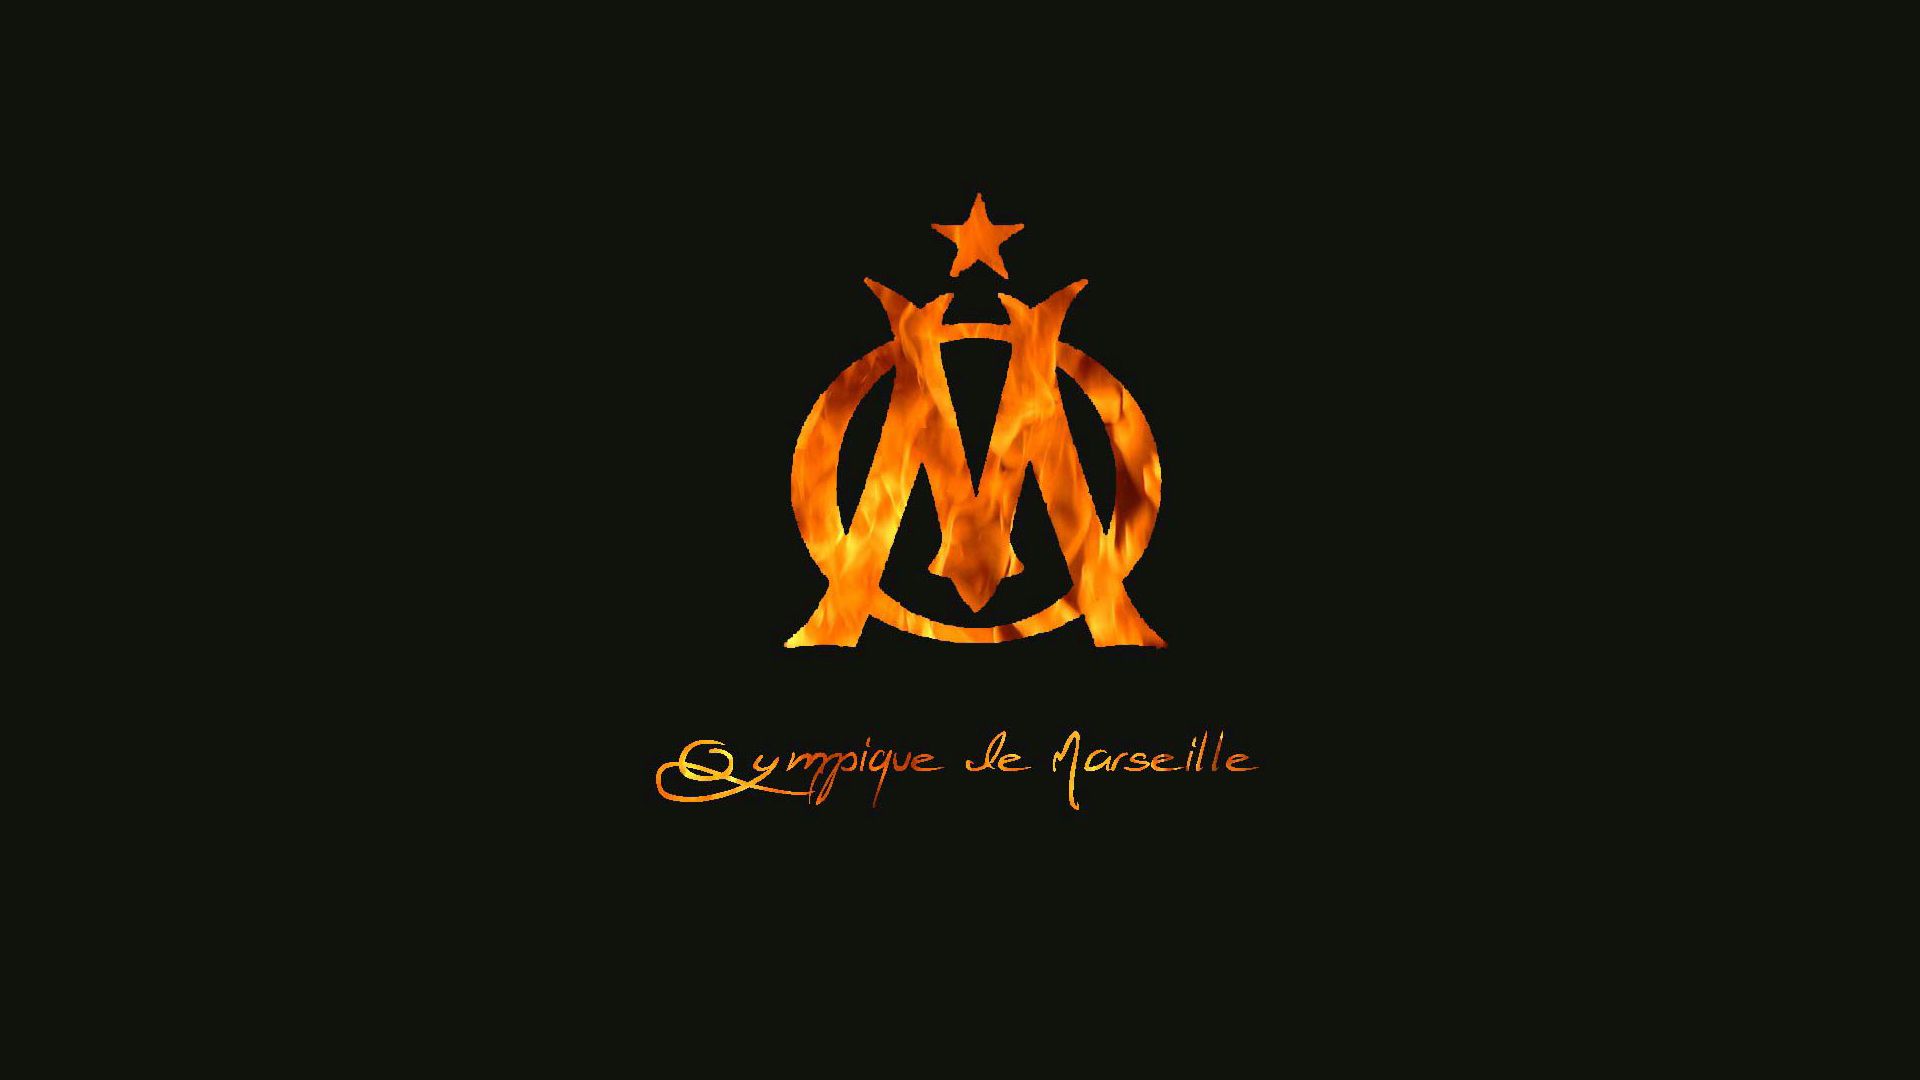 Olympique de Marseille Logo Wallpaper Cool Soccer Wallpaper 1920x1080